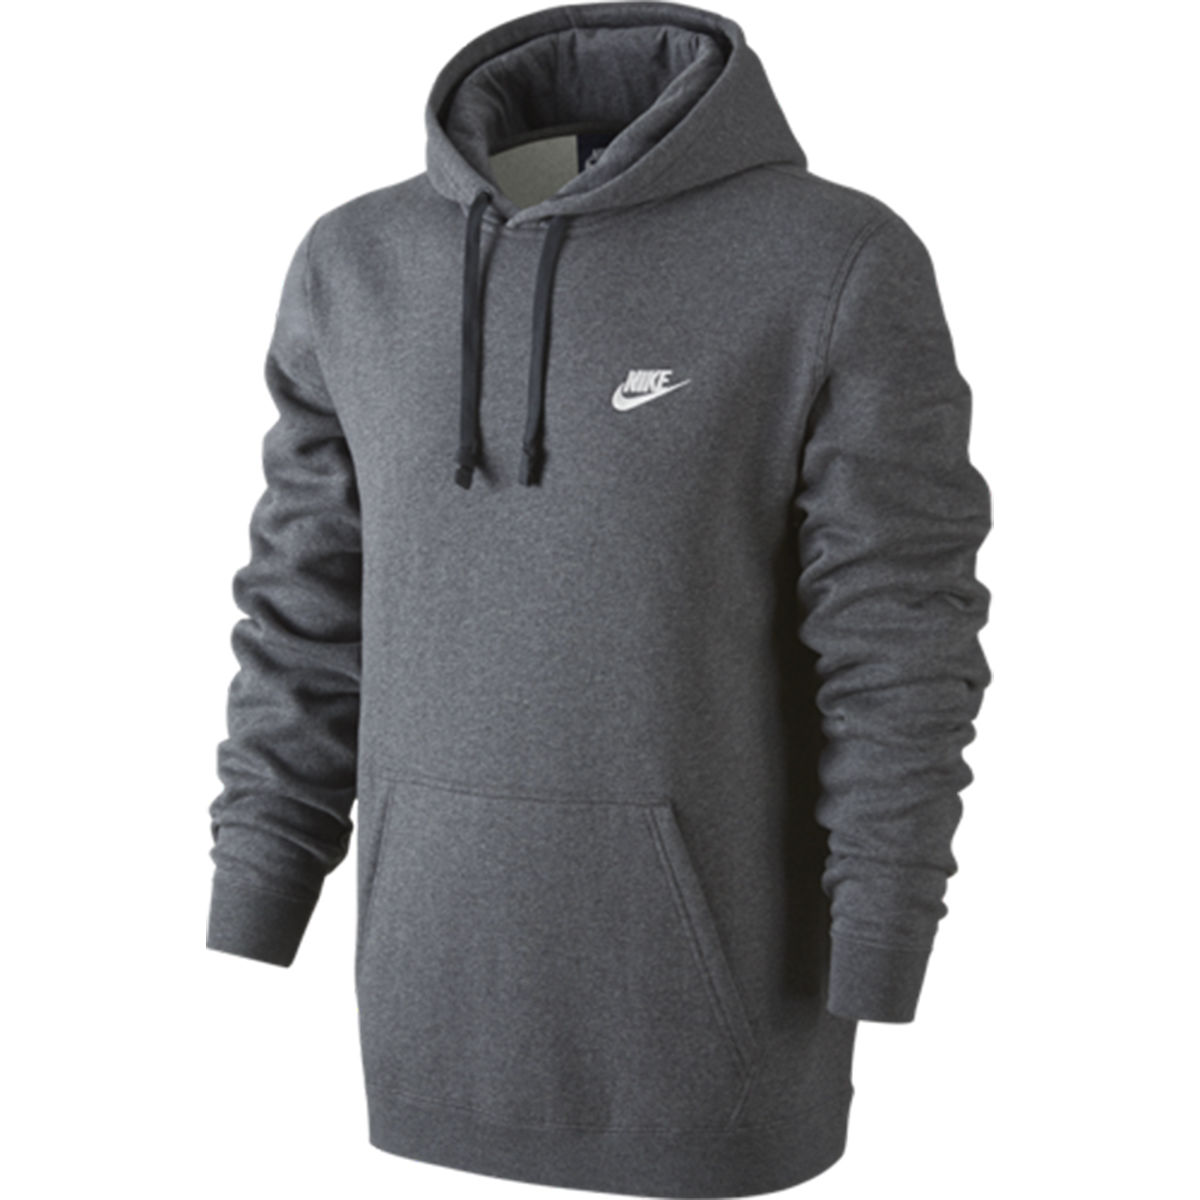 Nike Sportswear Mens Hoodie | Modell's Sporting Goods